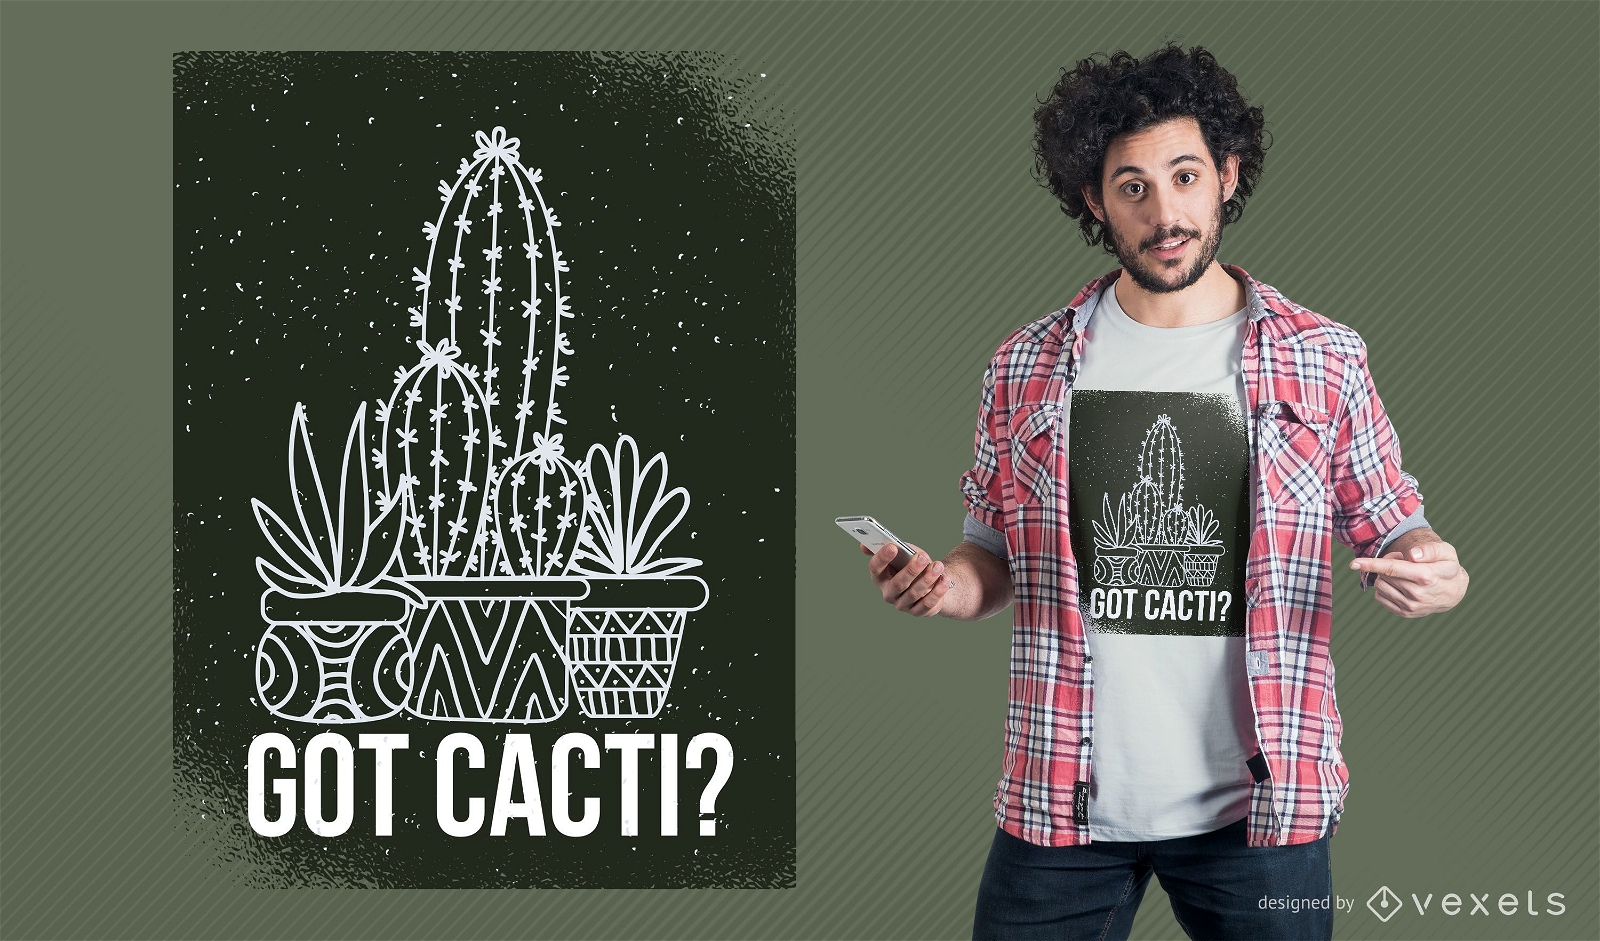 Got cacti t-shirt design